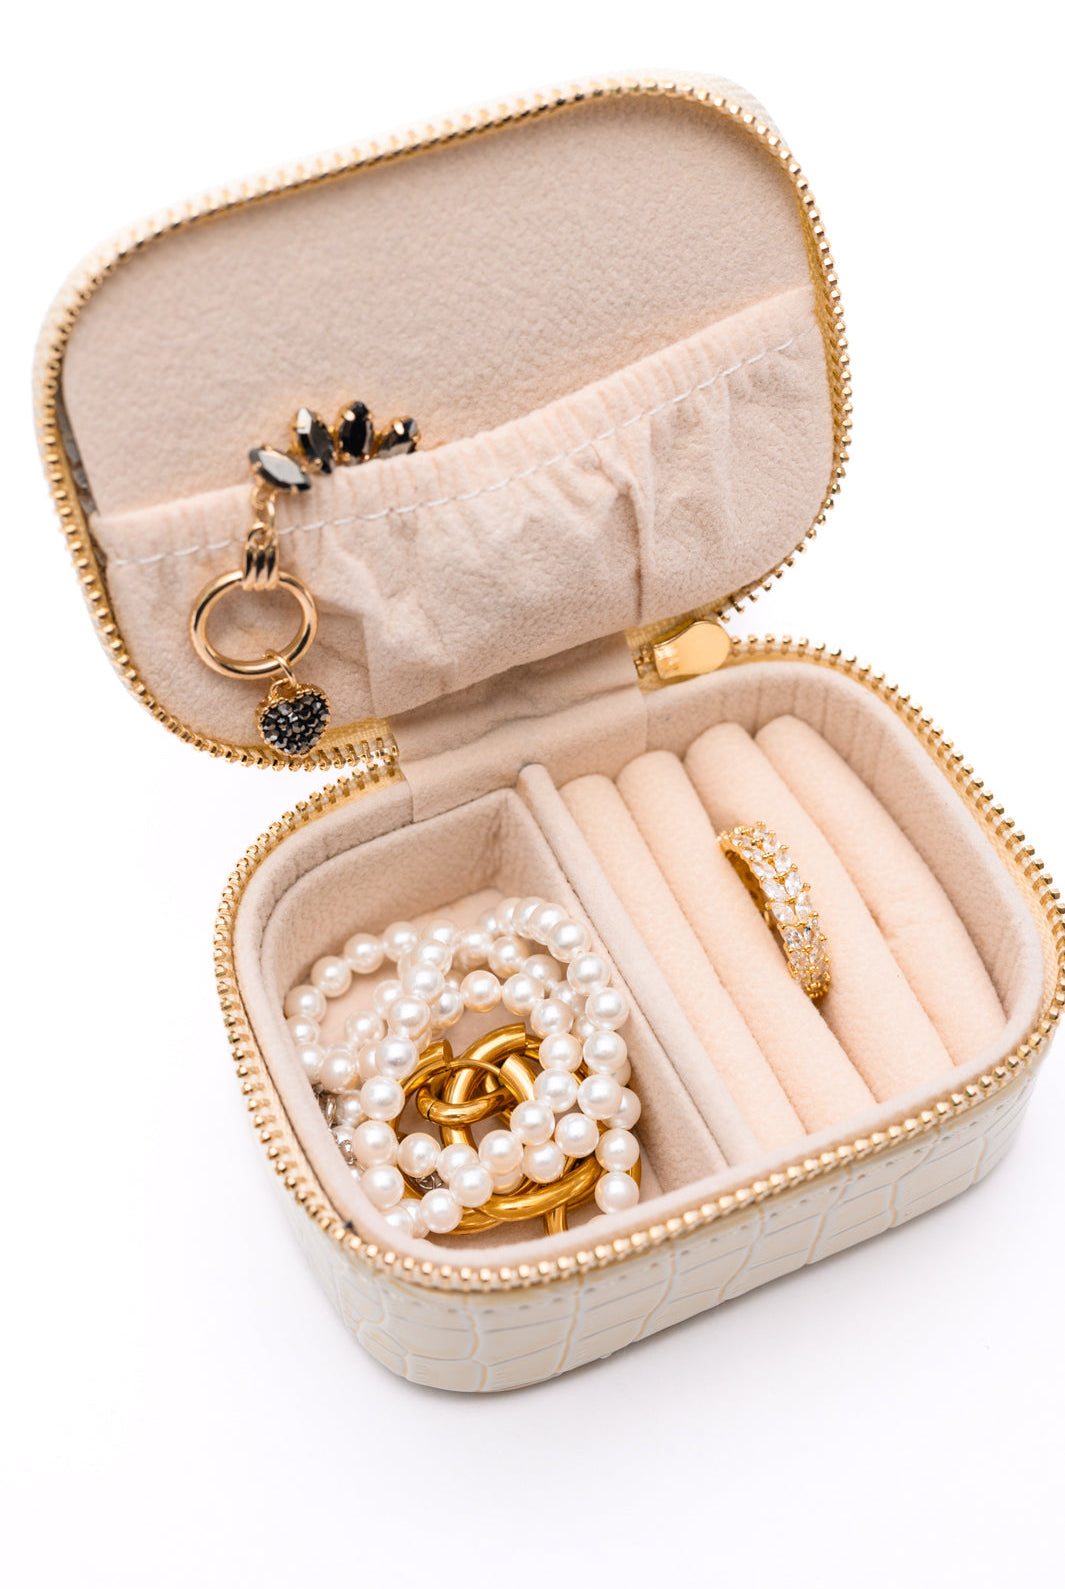 Travel Jewelry Case in Cream Snakeskin-Purses & Bags-Krush Kandy, Women's Online Fashion Boutique Located in Phoenix, Arizona (Scottsdale Area)